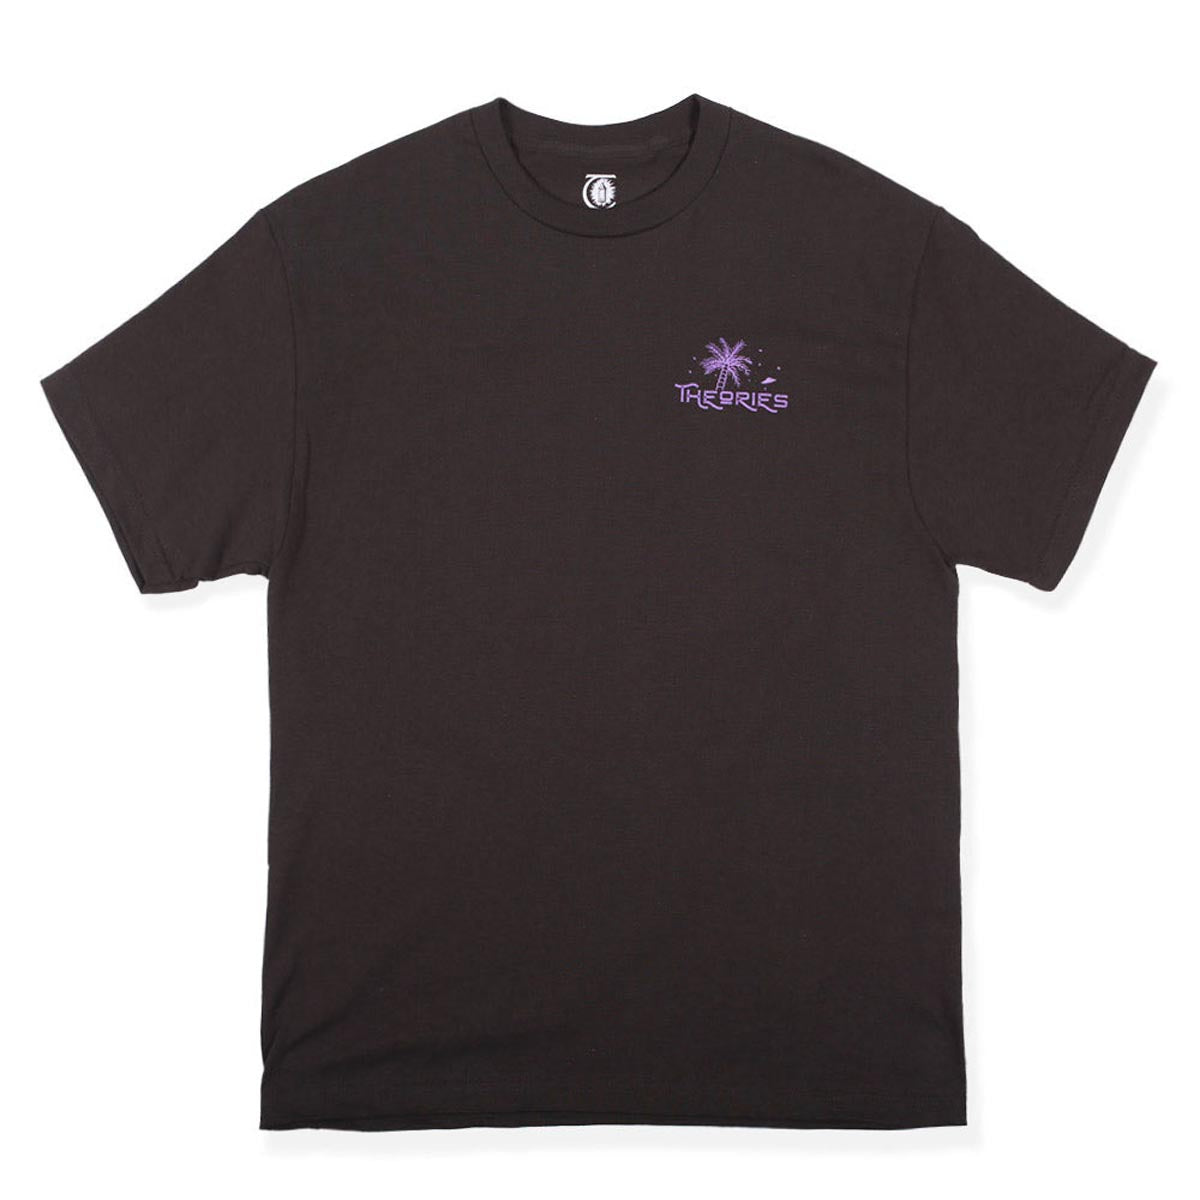 Theories Oasis T-Shirt - Black image 2